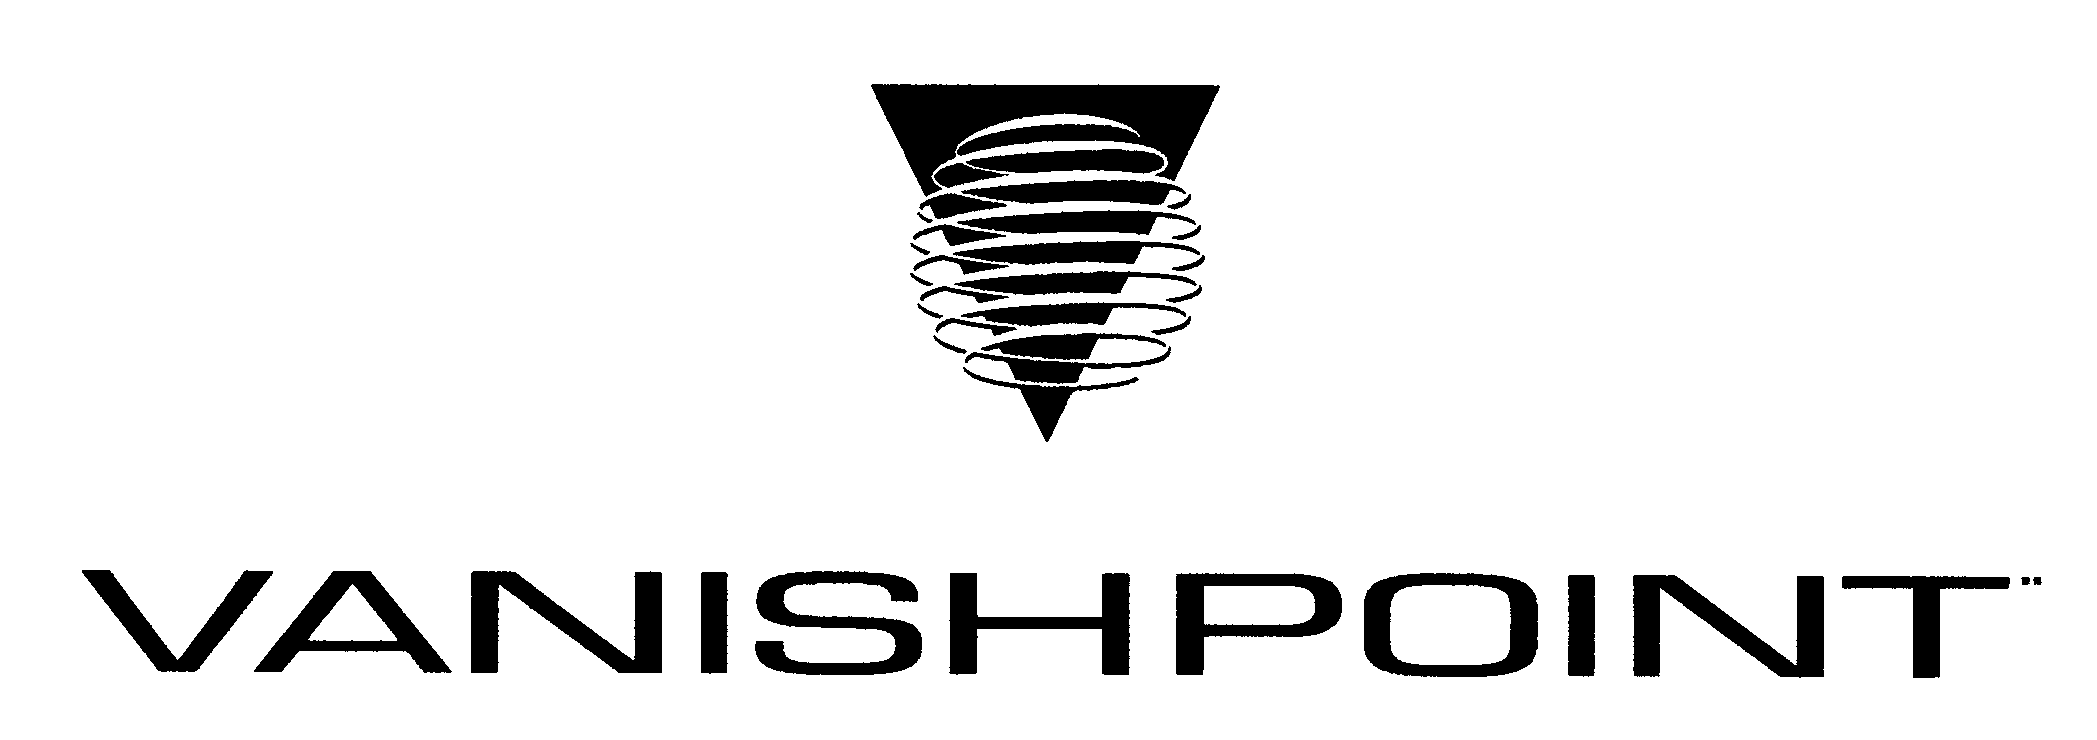 Trademark Logo VANISHPOINT